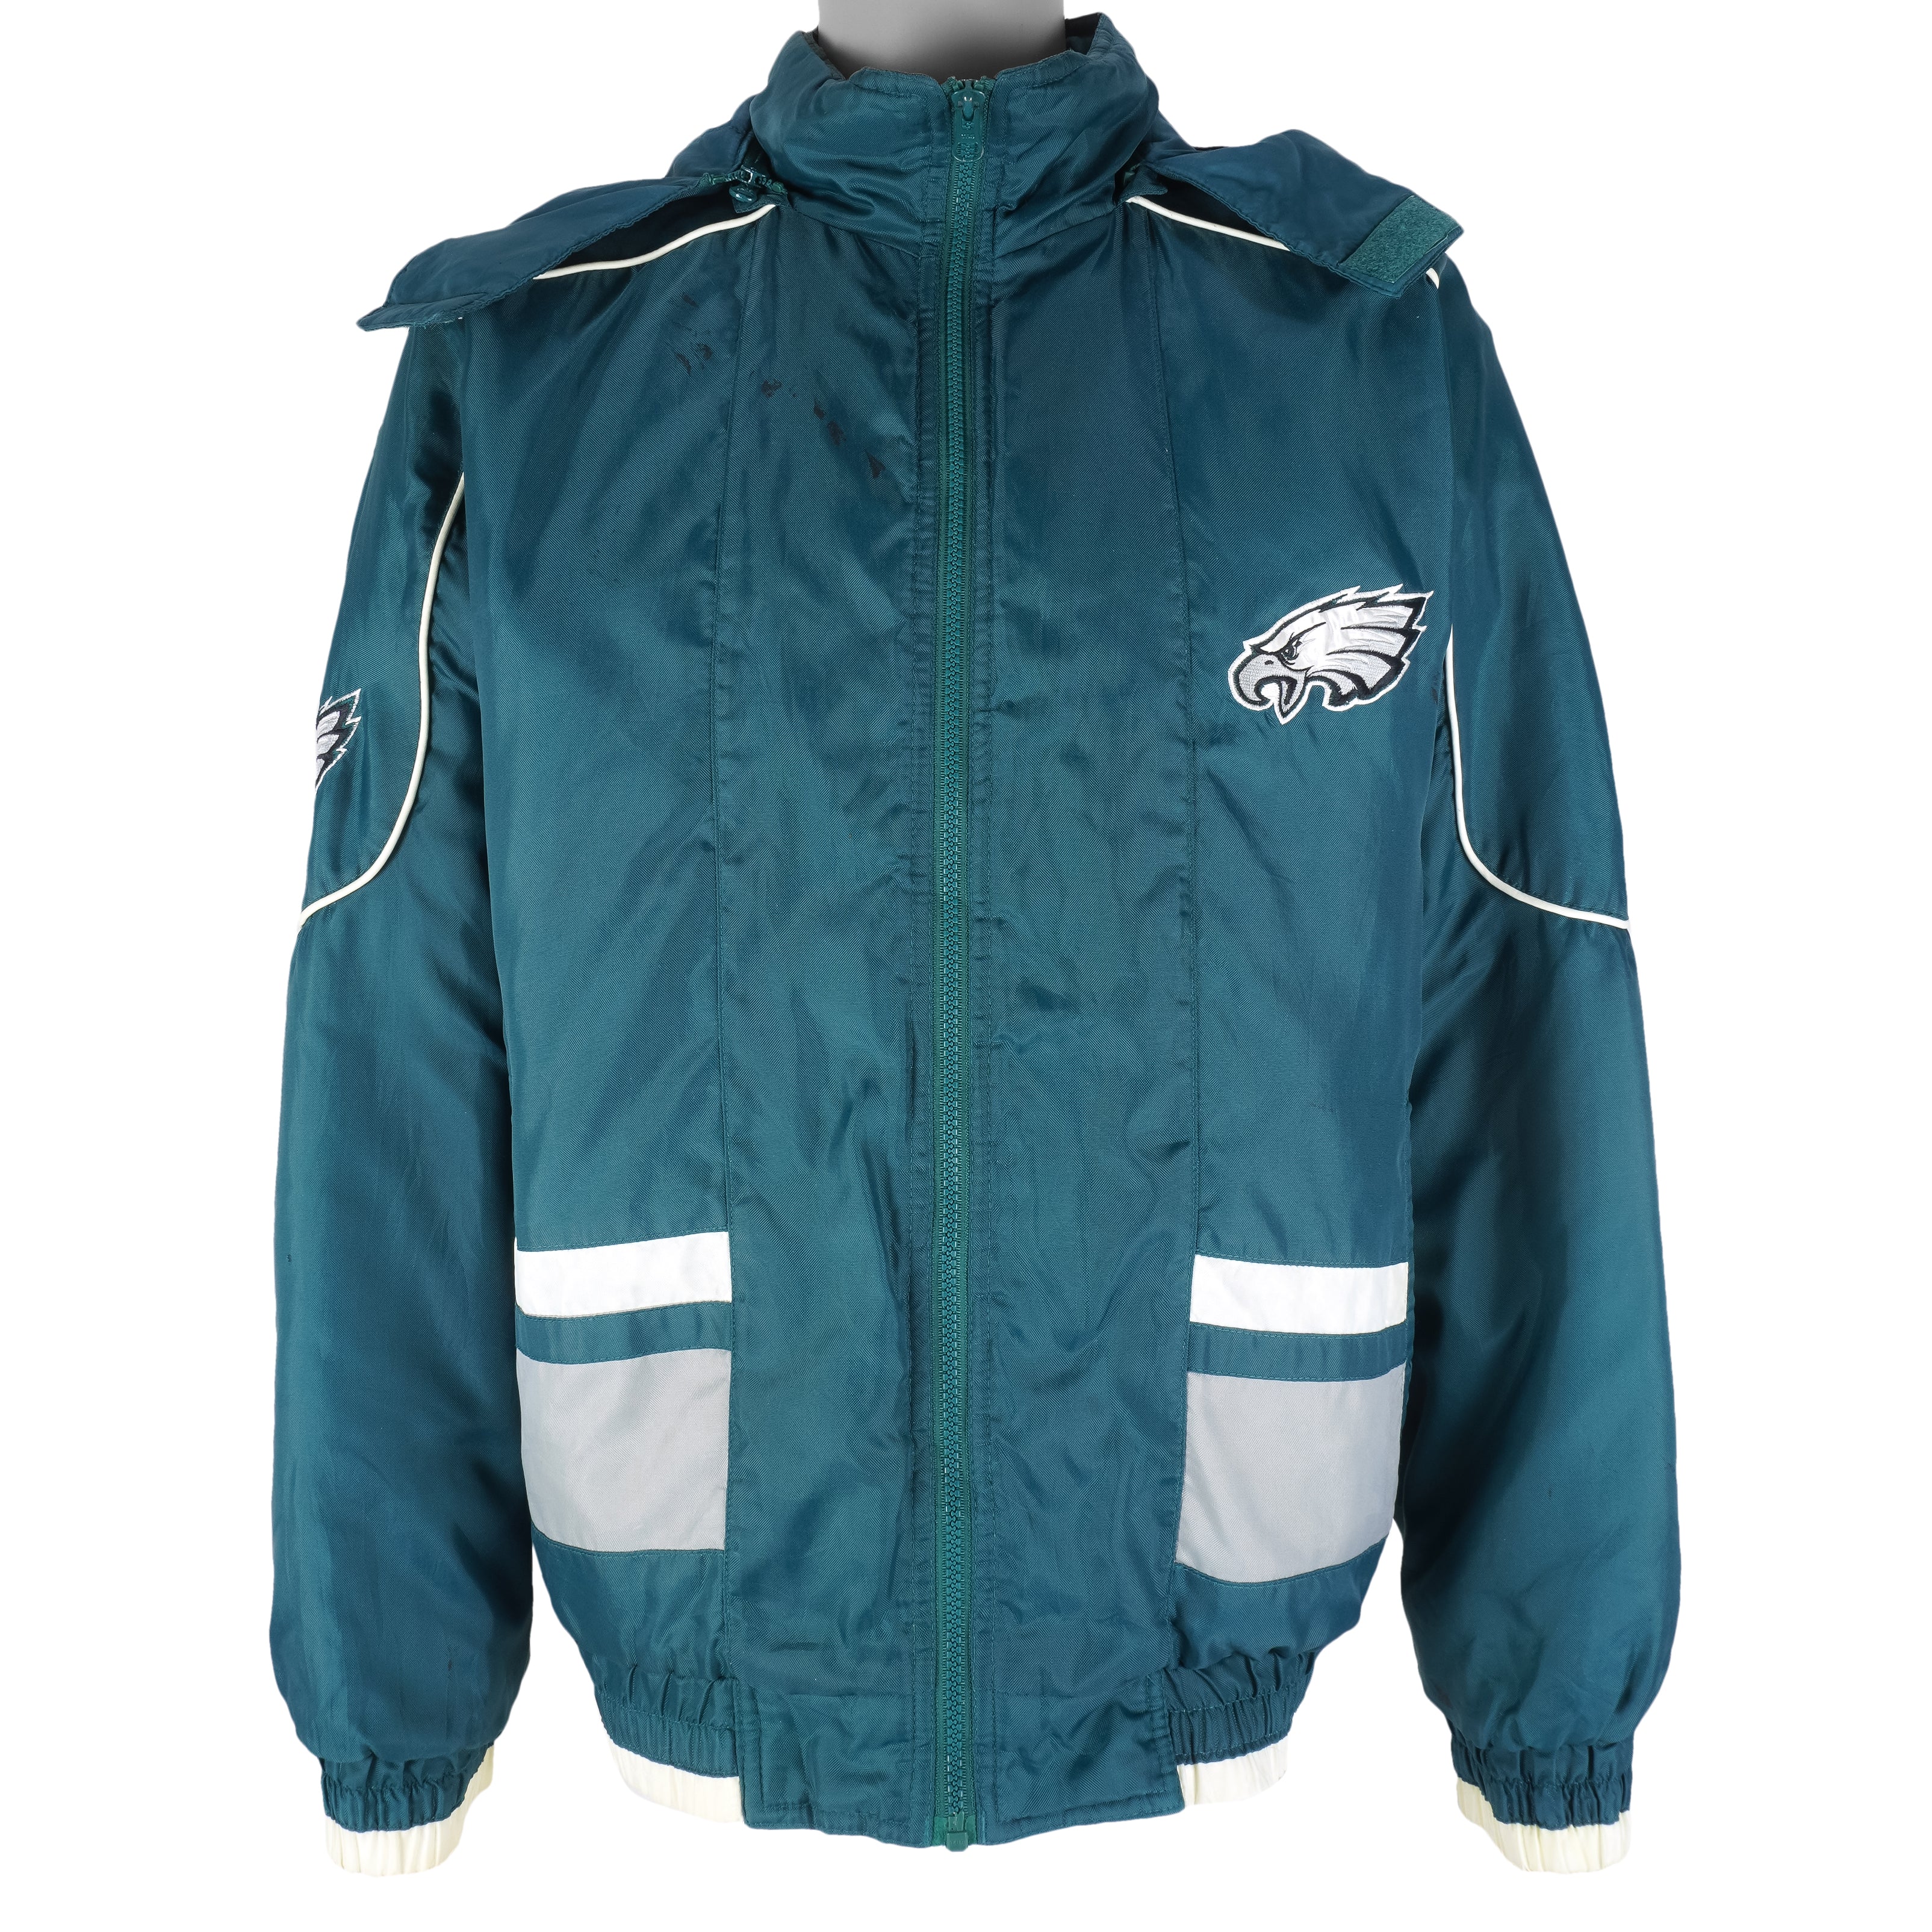 Vintage NFL - Philadelphia Eagles Warm Jacket 2000s Large